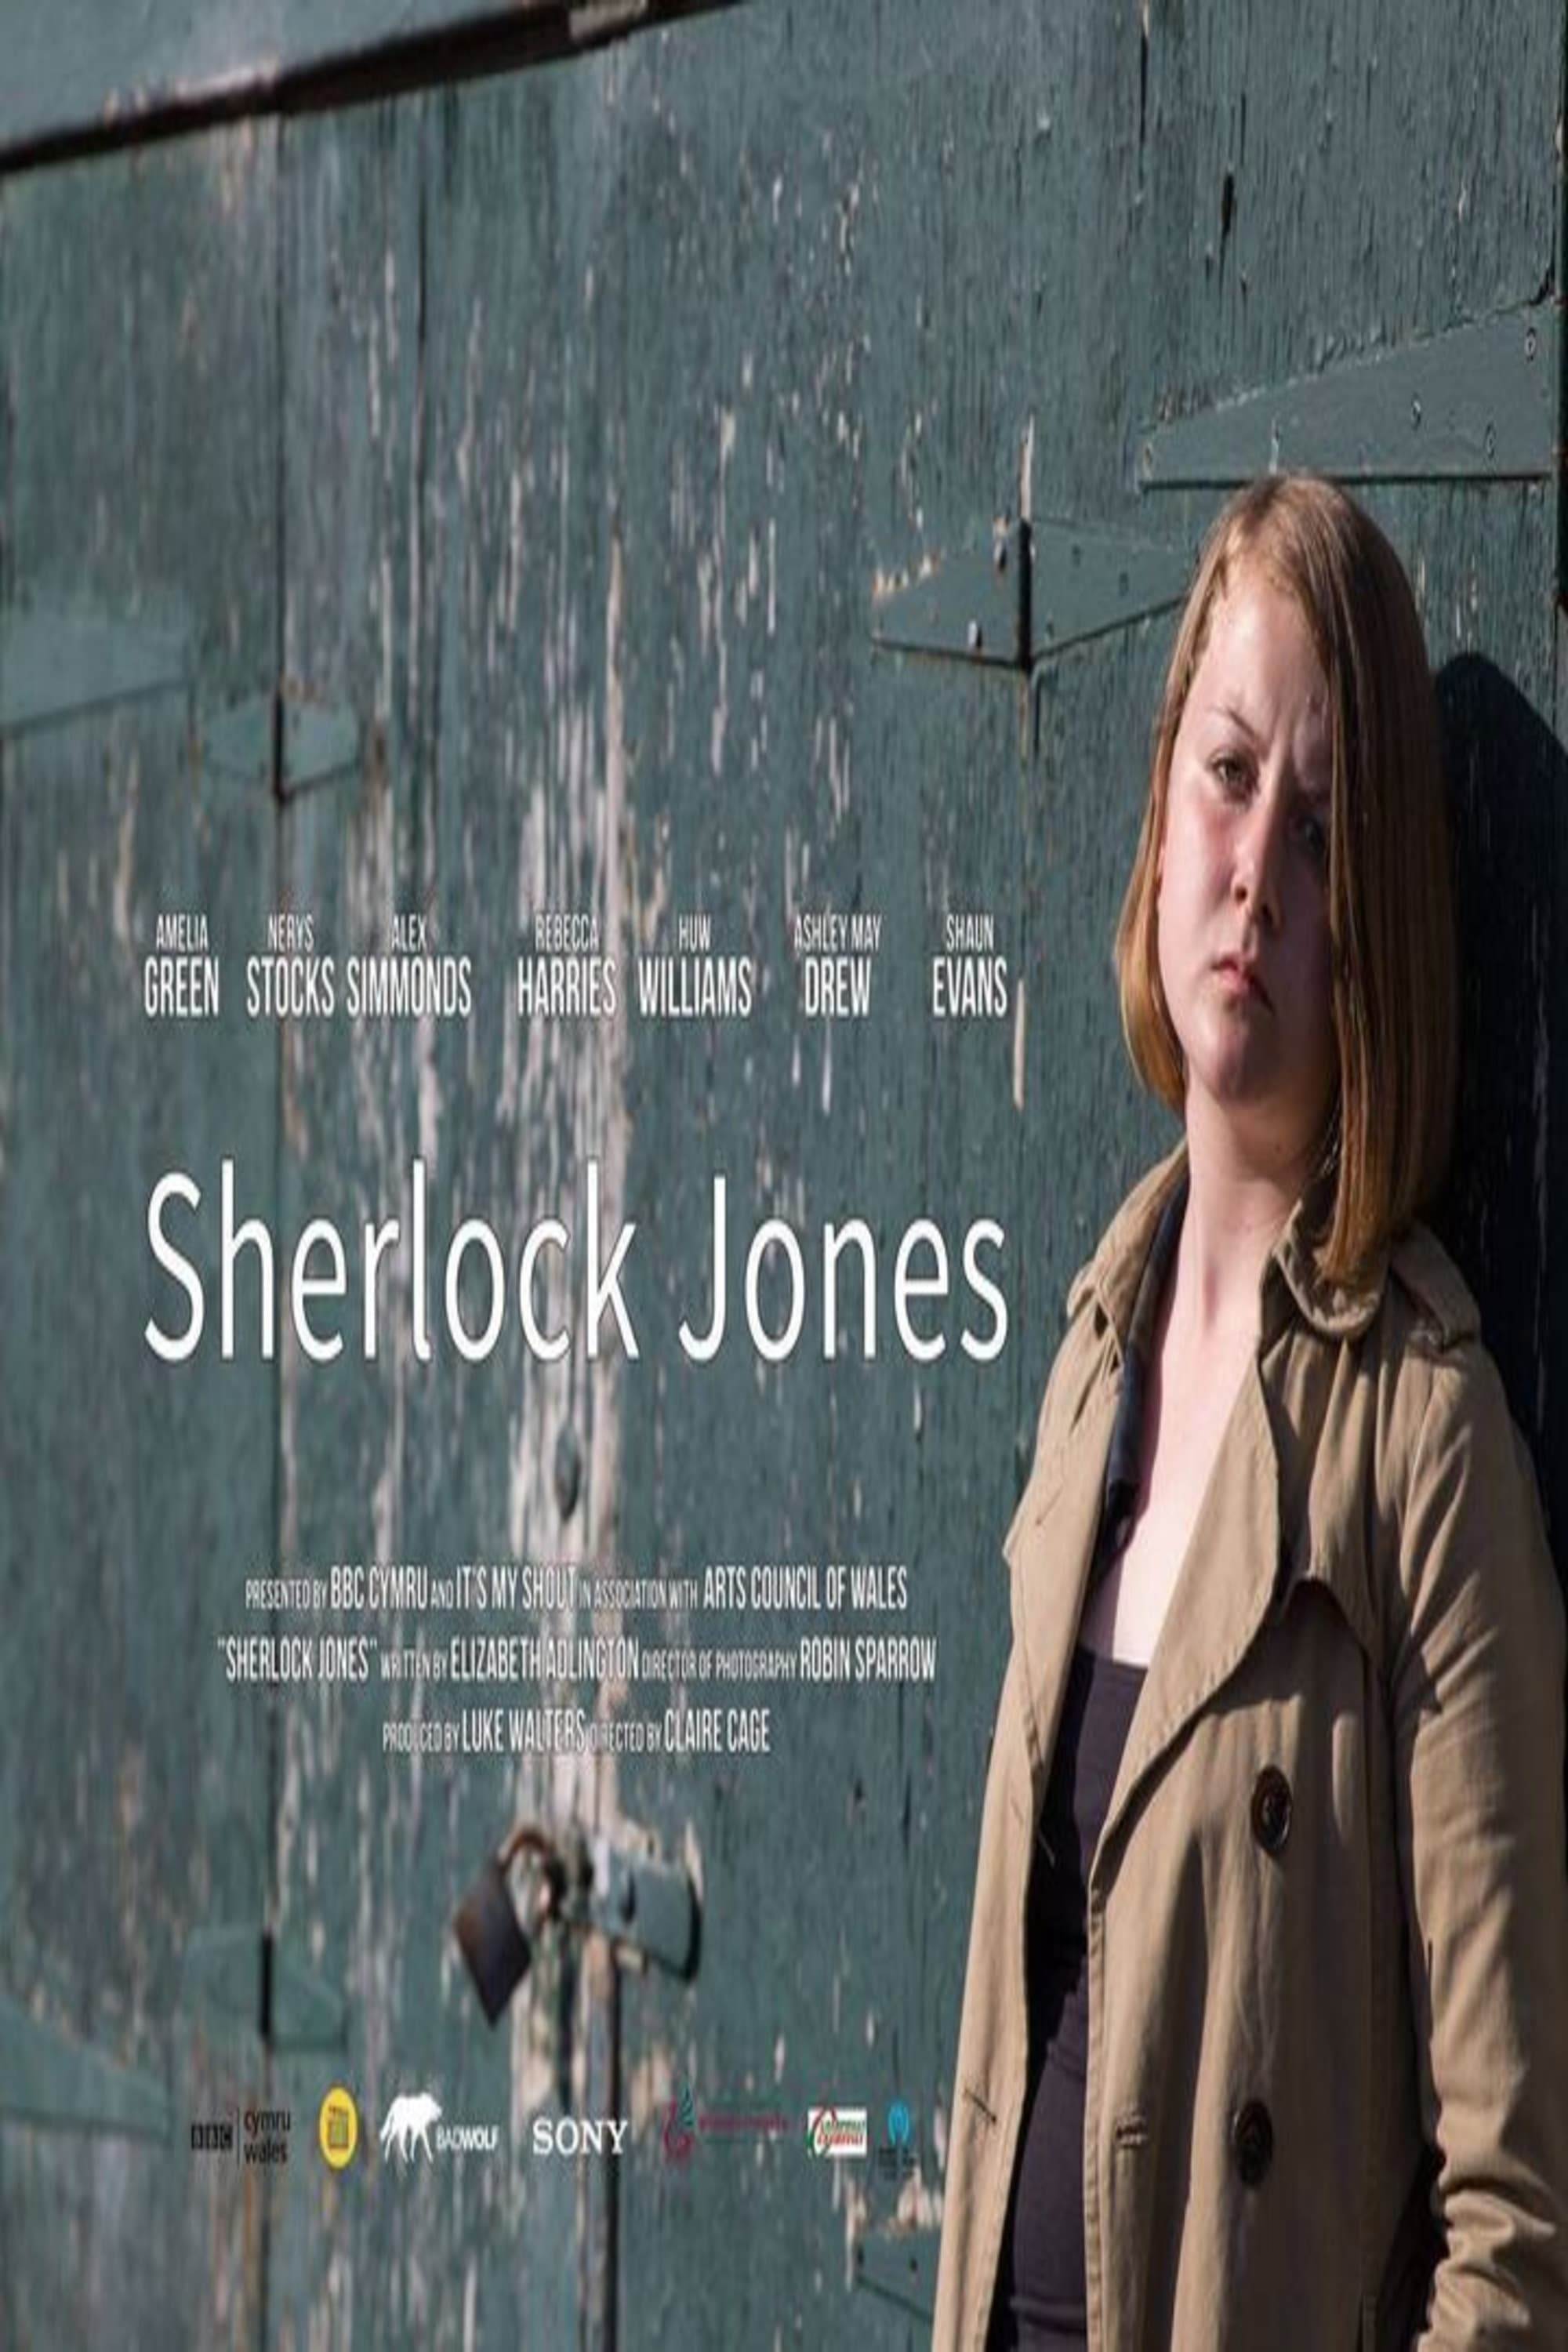 Sherlock Jones